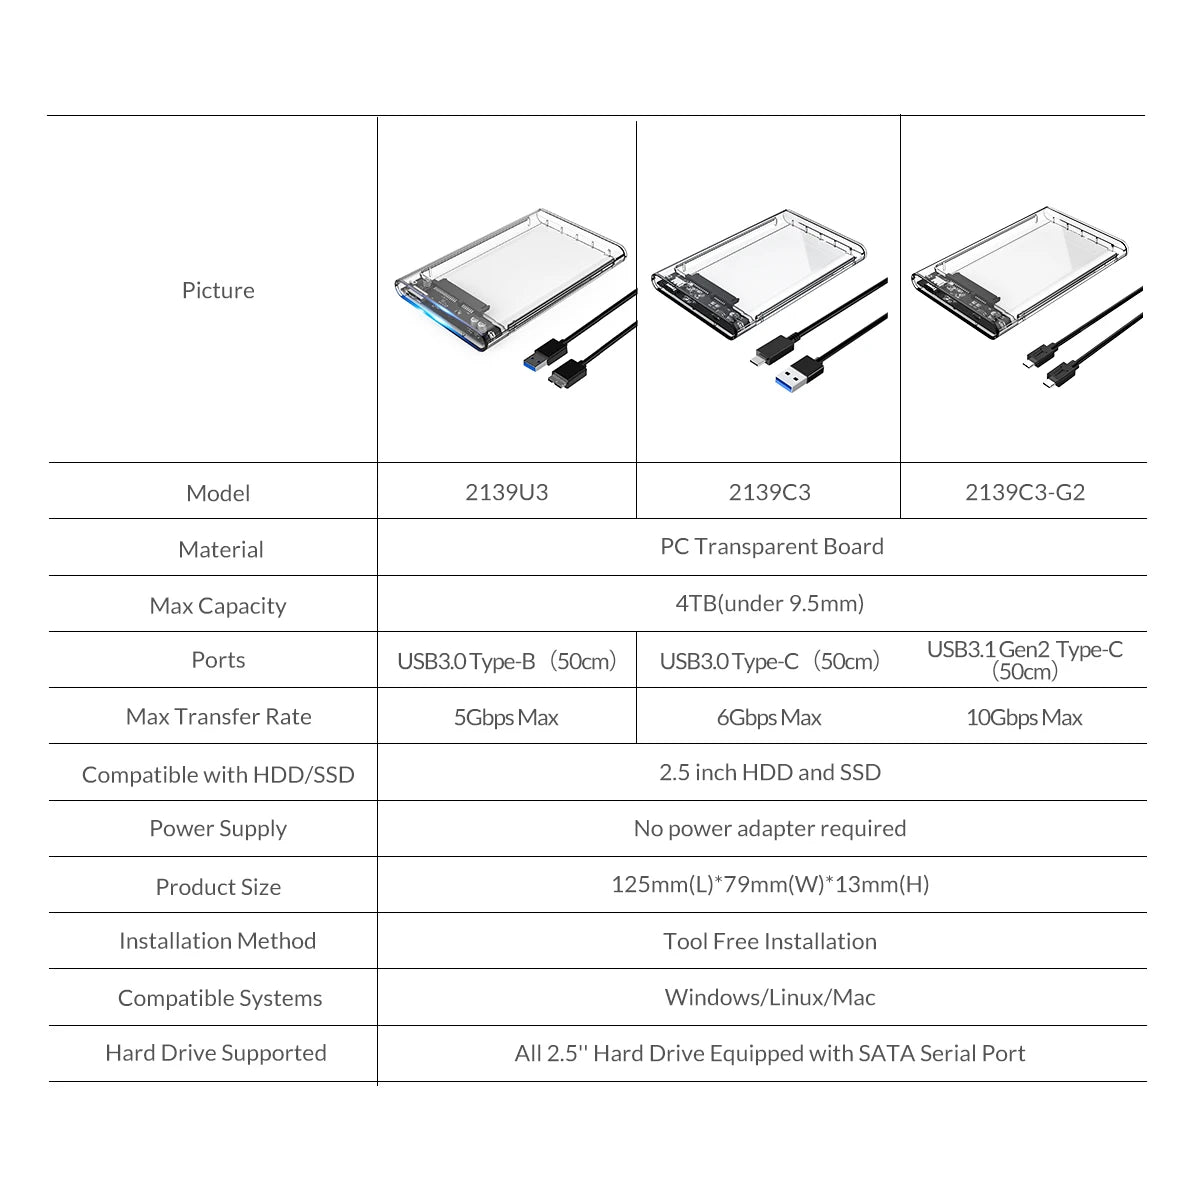 ORICO Transparent HDD Case SATA to USB 3.0 Hard Drive